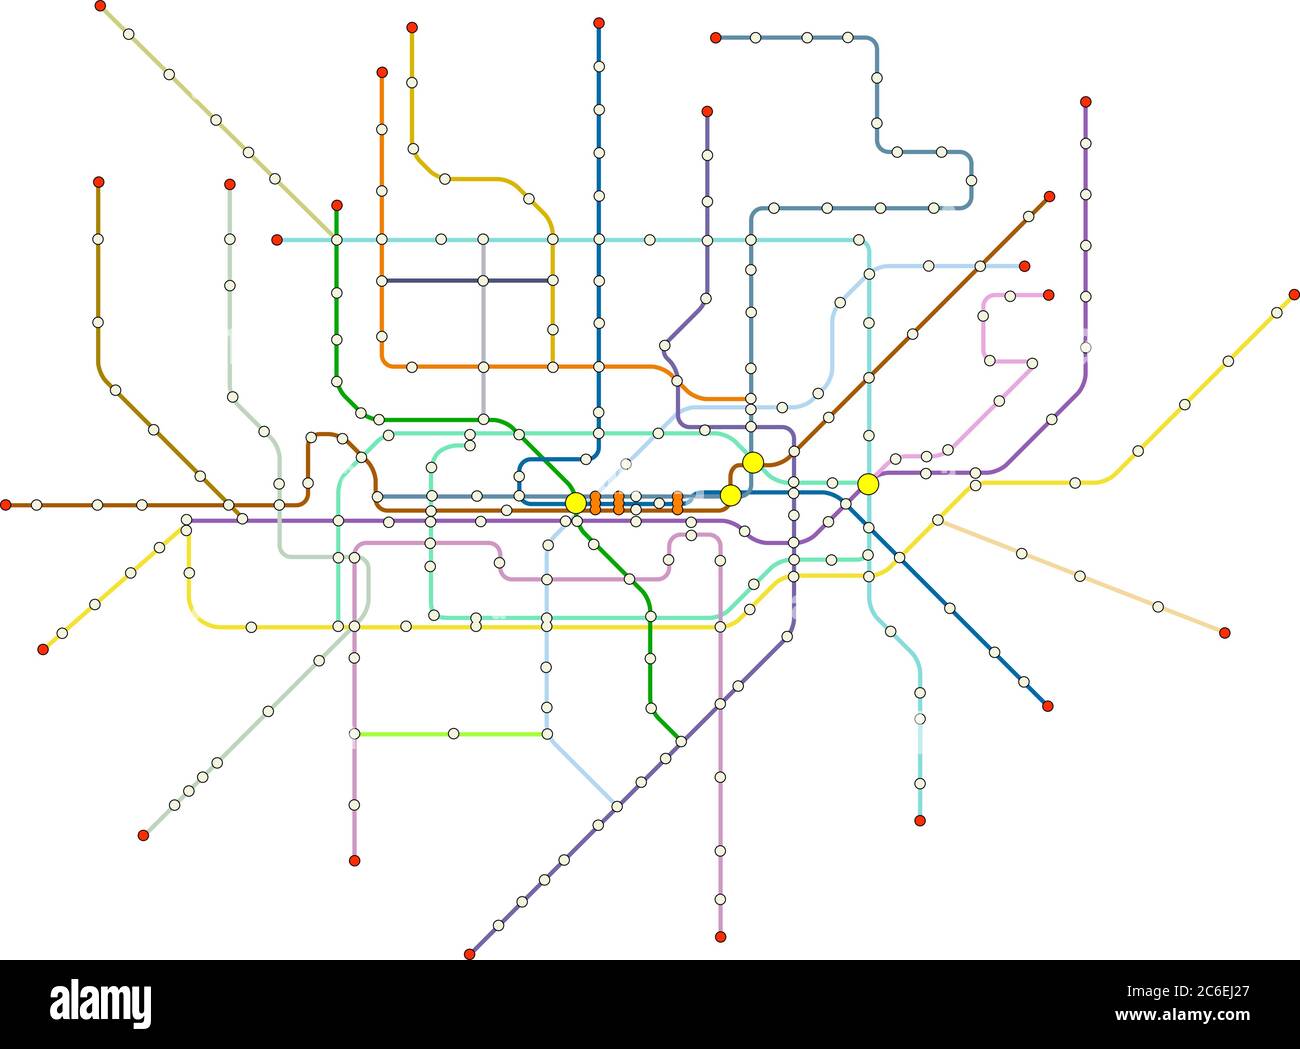 Fiktiver U-Bahnplan, öffentliche Verkehrsmittel, Karte, freier Kopierplatz Stock Vektor